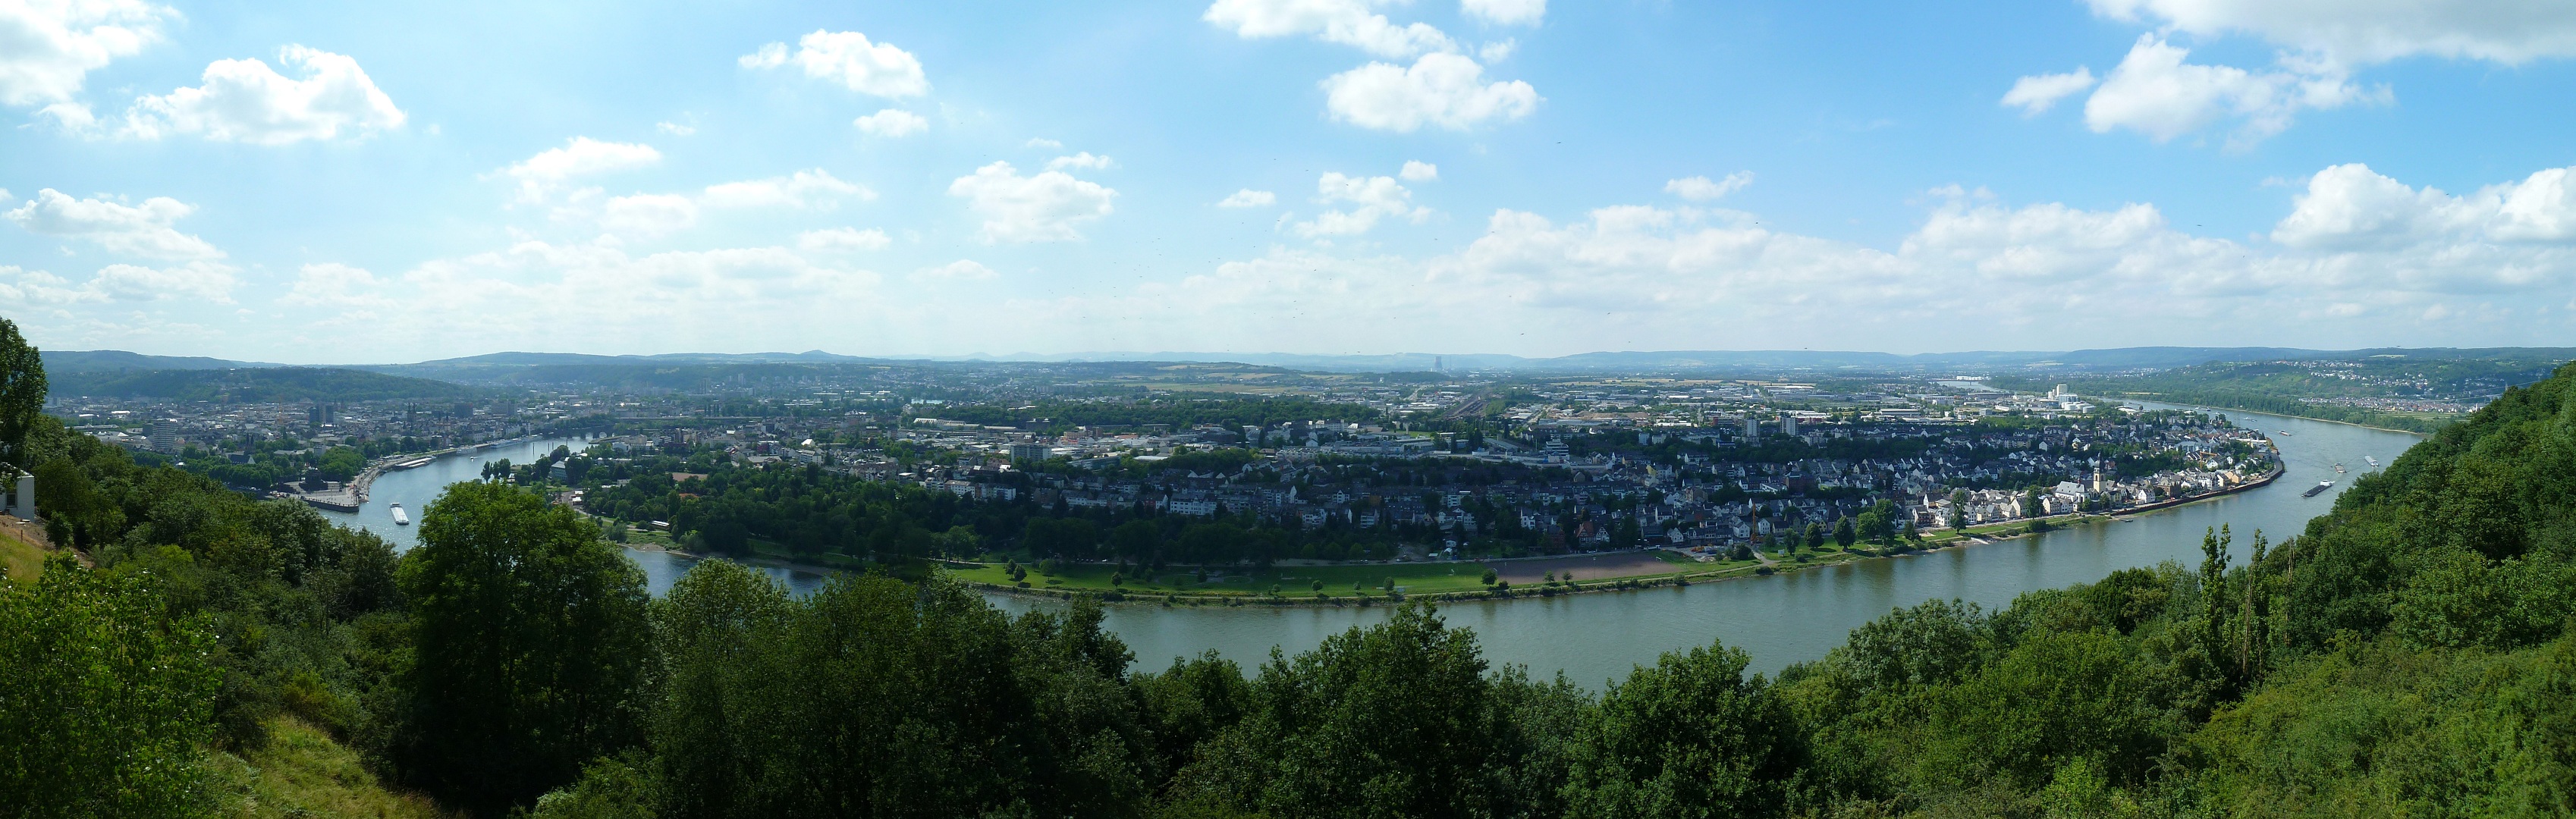 Panoramablick auf Koblenz - panoramio